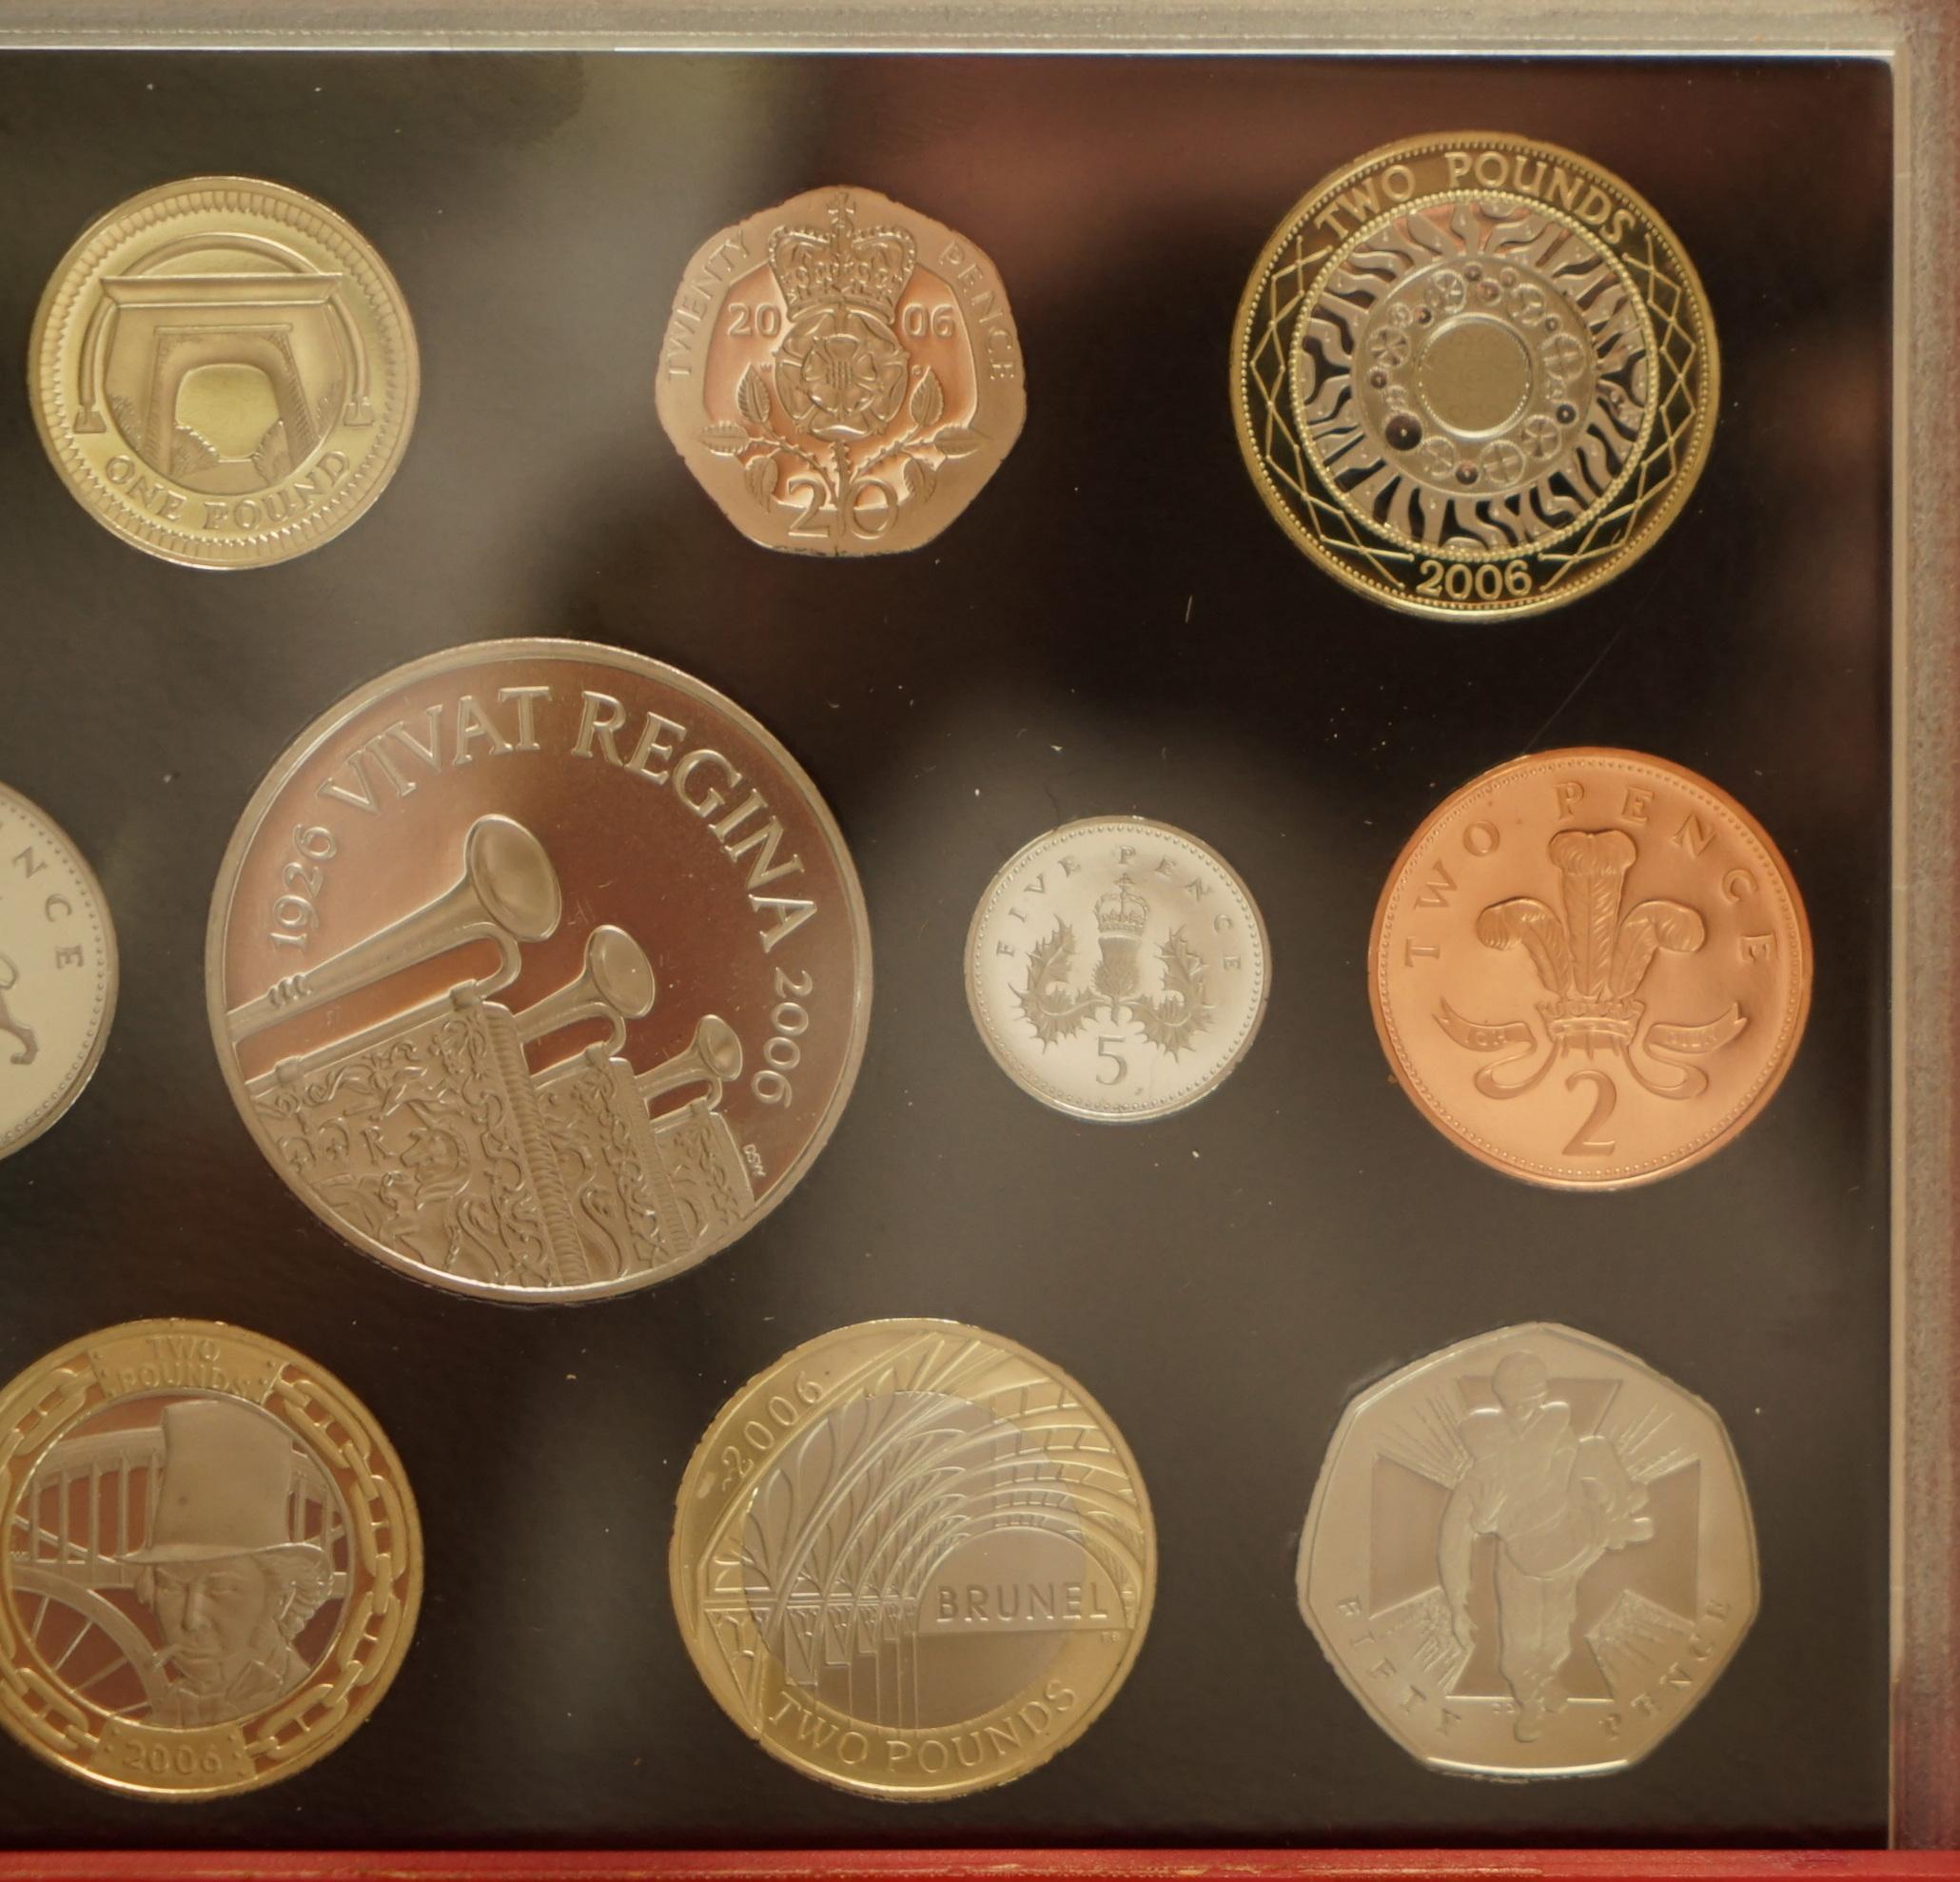 13 Coin Royal Mint 1926, 2006 Queen Elizabeth Proof Set with £5 Vivat Regina 4